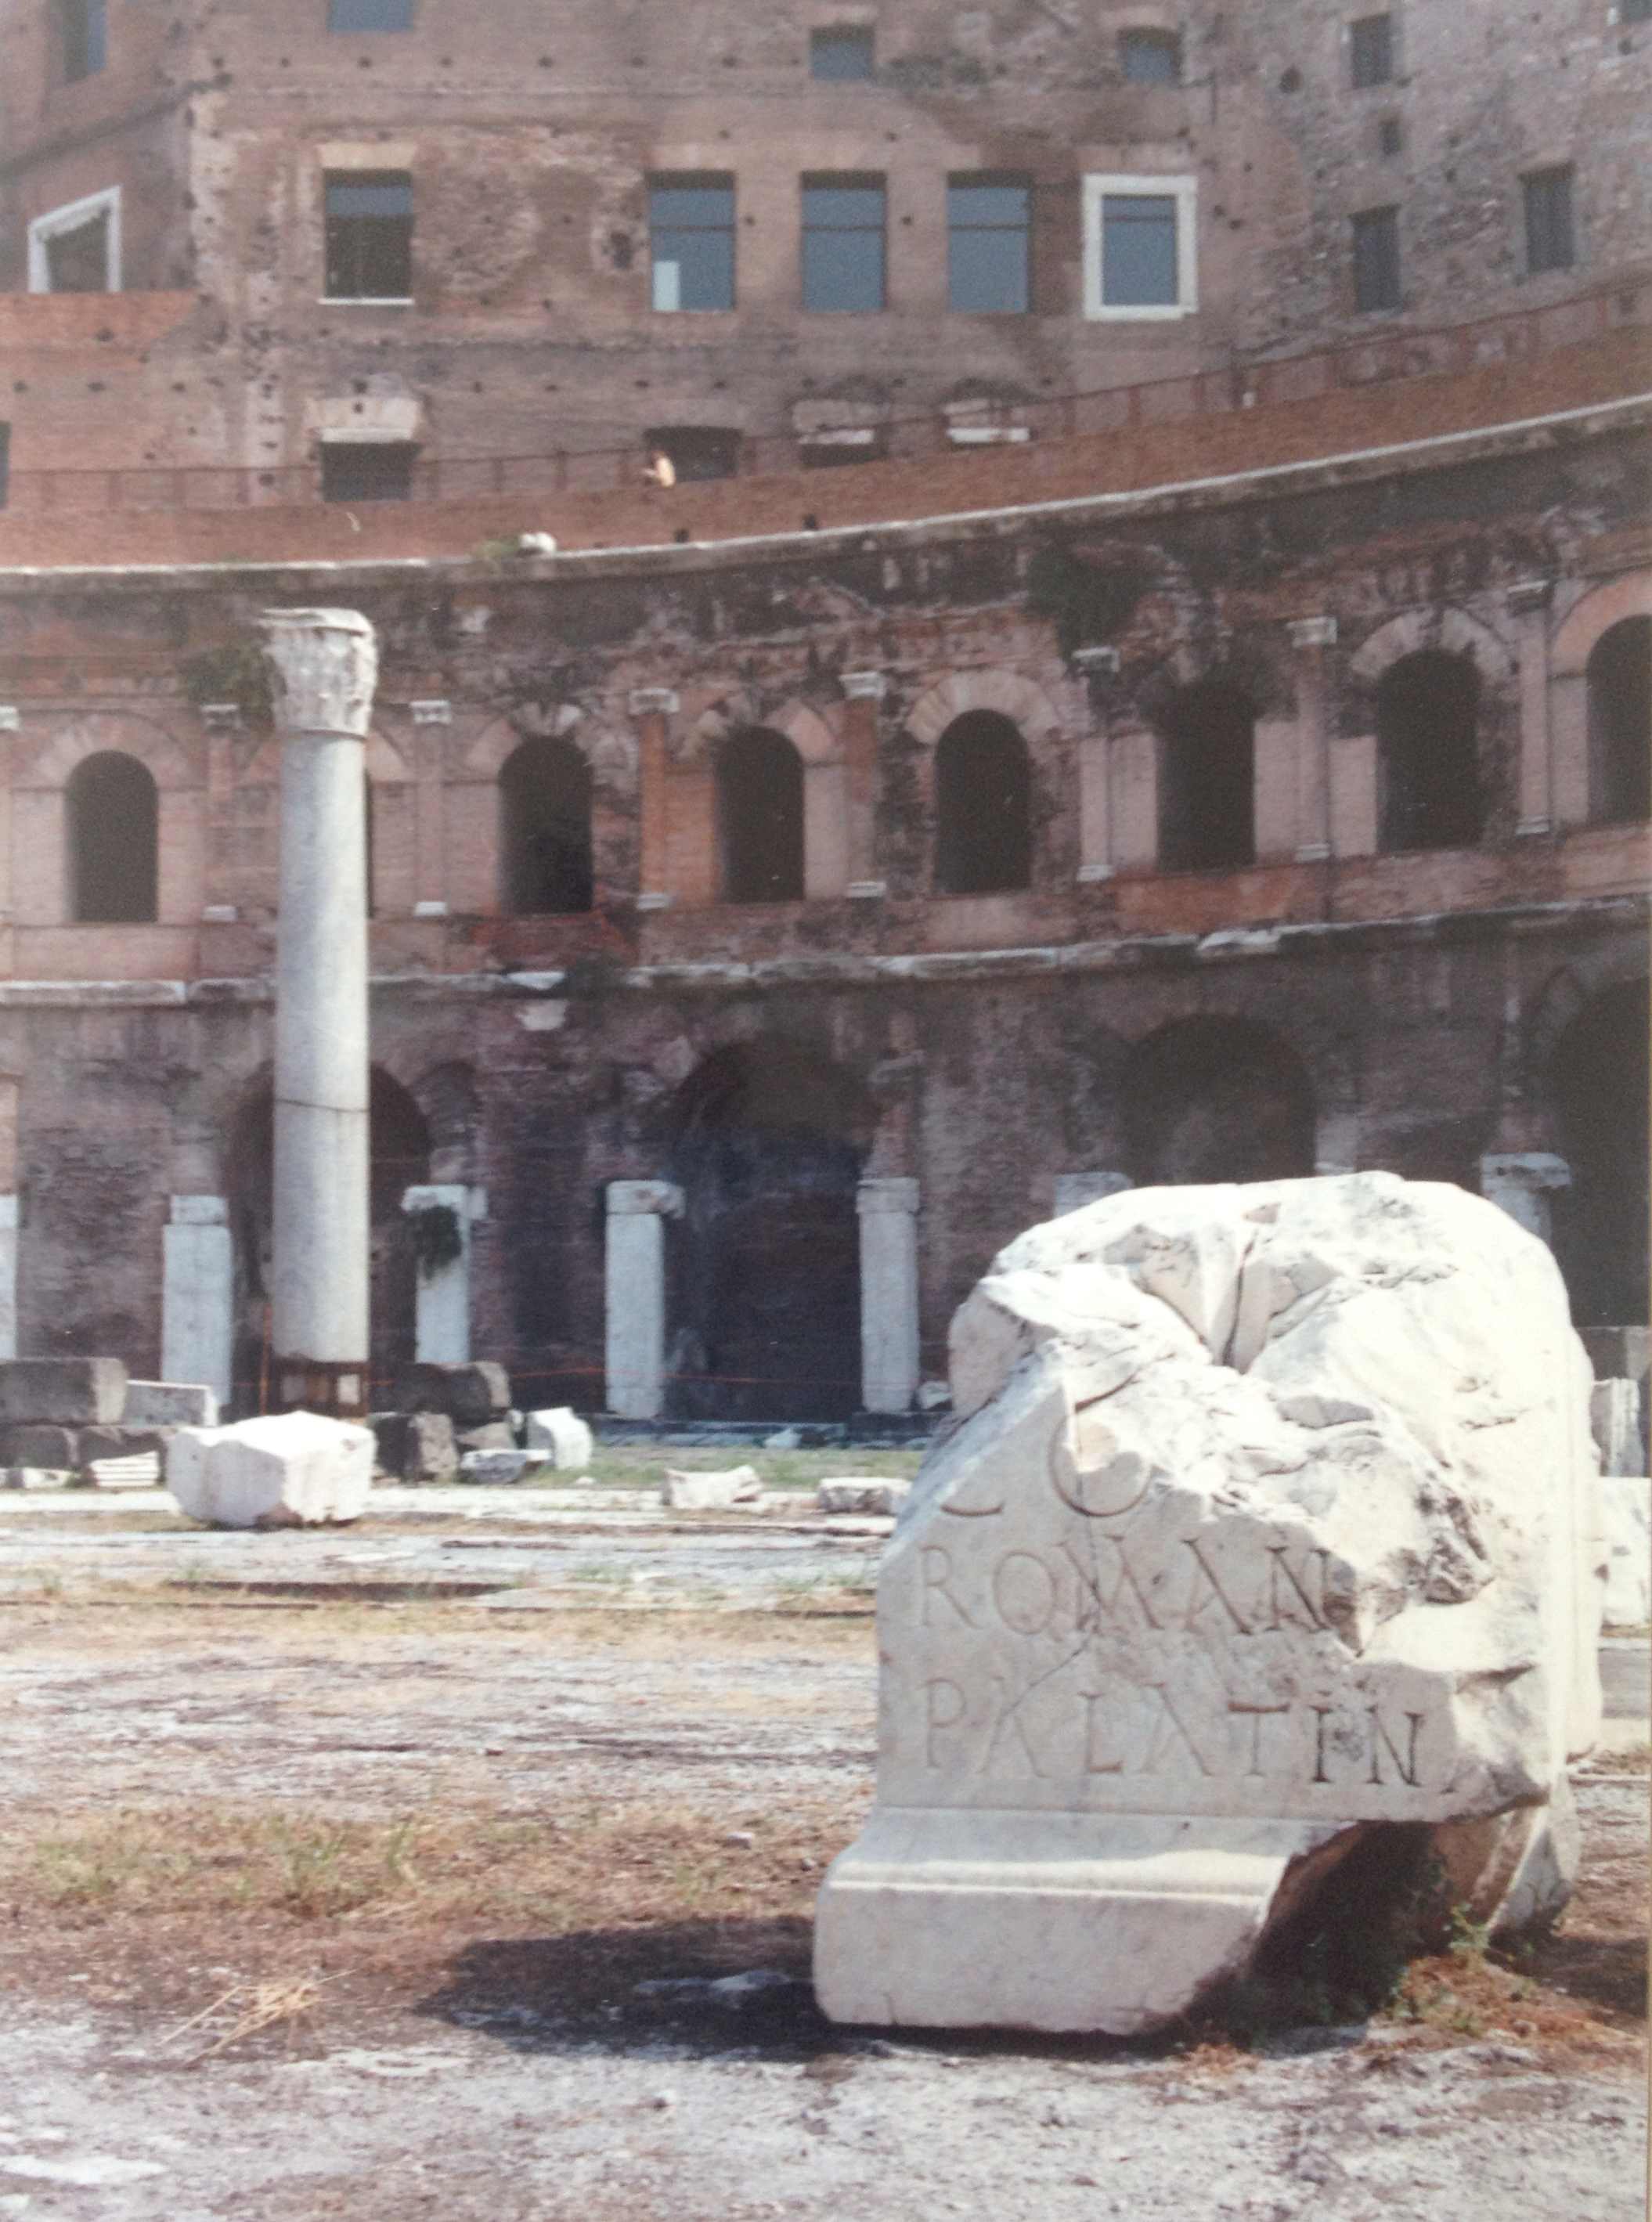 Rome-palatine-1989.jpg